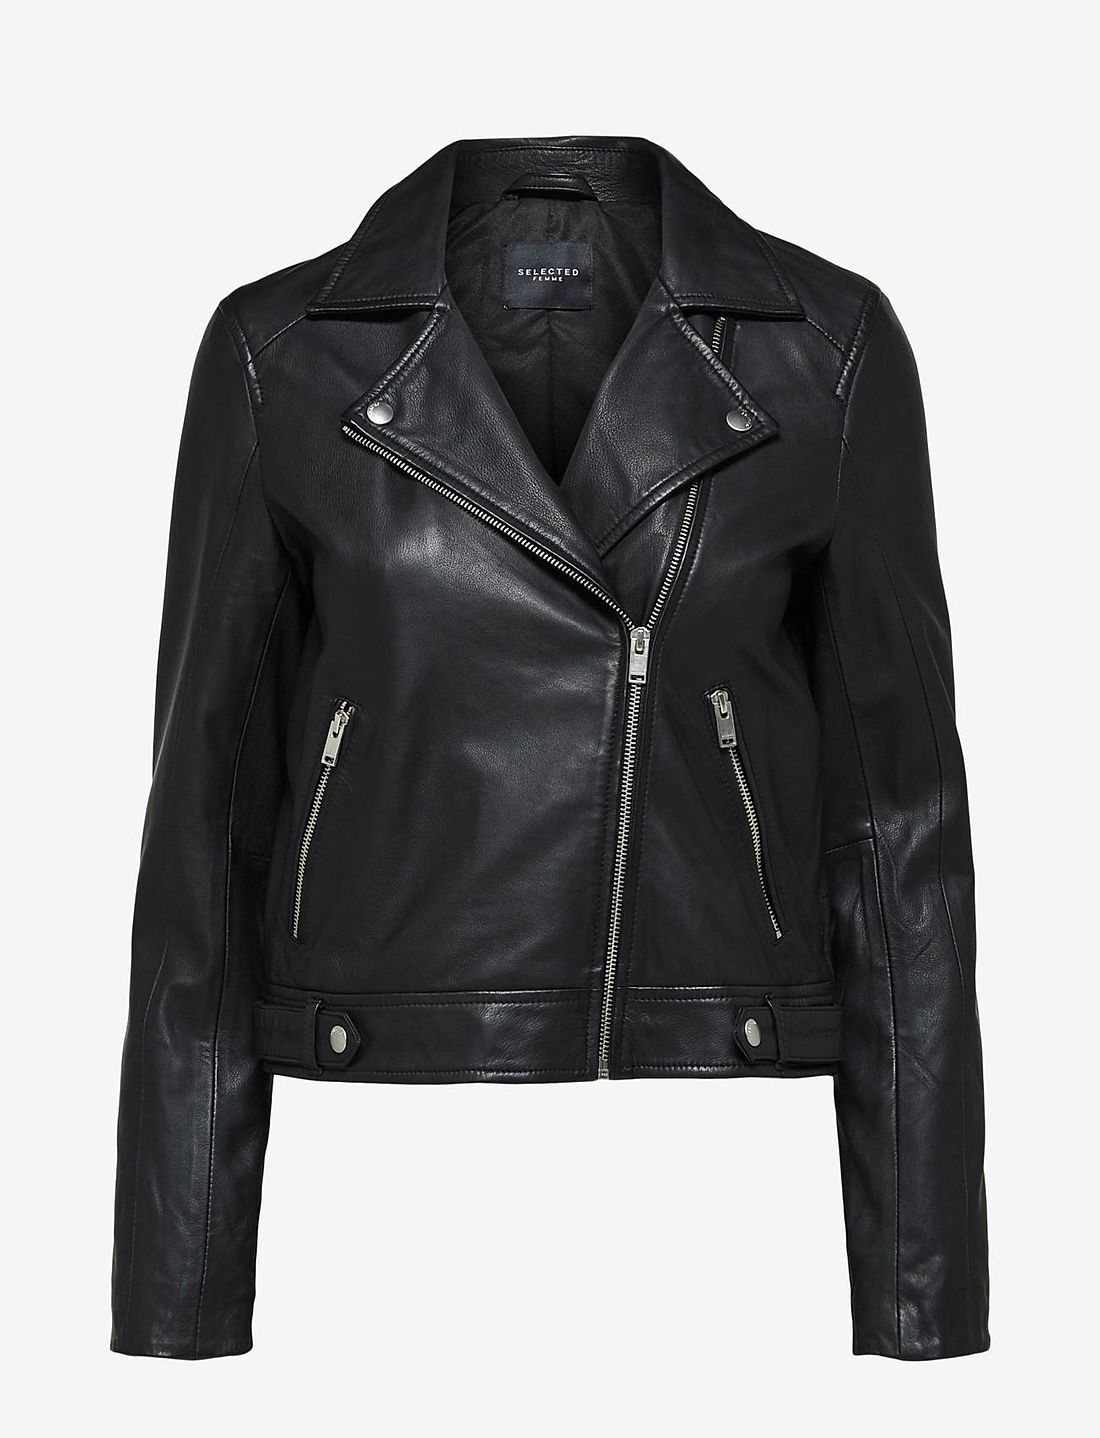 smerte Teenager I øvrigt Selected Femme Slfkatie Leather Jacket - 95.99 €. Buy Leather jackets from  Selected Femme online at Boozt.com. Fast delivery and easy returns